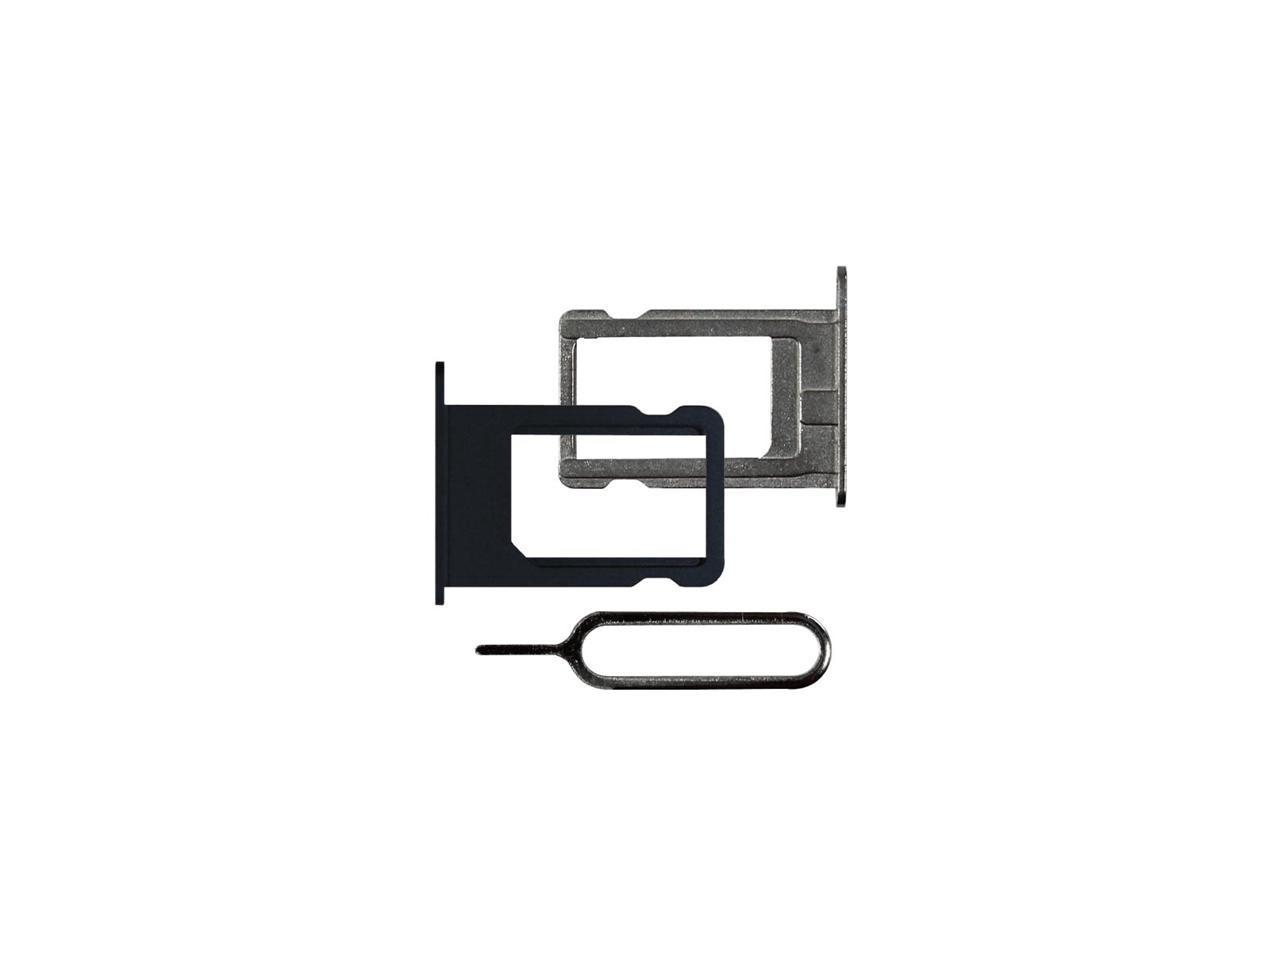 Ziya Replacement Repair Part Nano Sim Card Tray Holder Slot For Iphone 5 6 6s Black Newegg Com